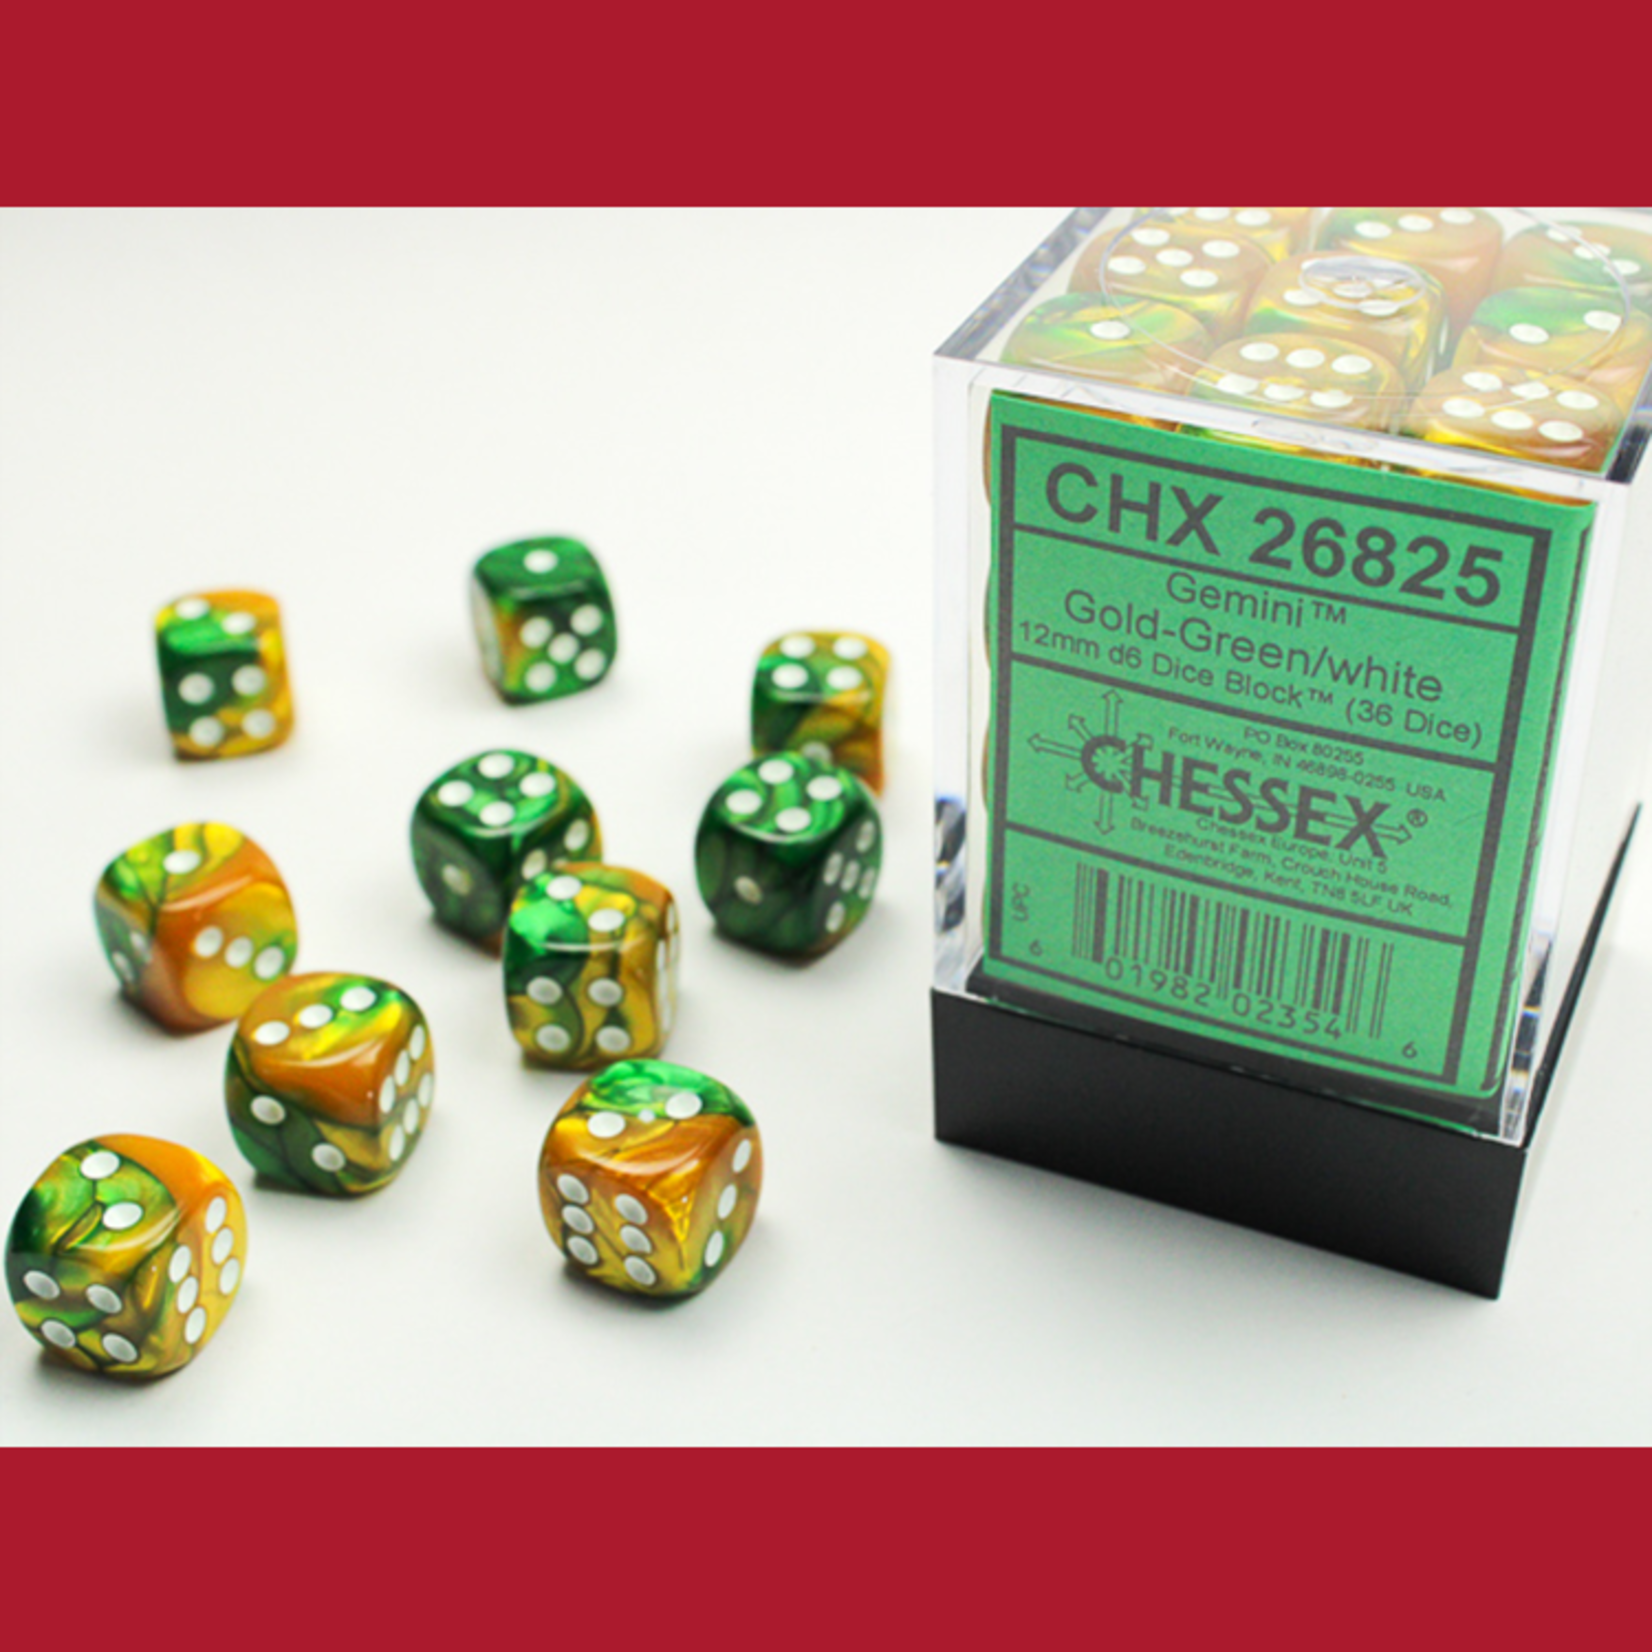 Chessex CHX 26825 Gemini Gold - Green/White 12mm (36d6)